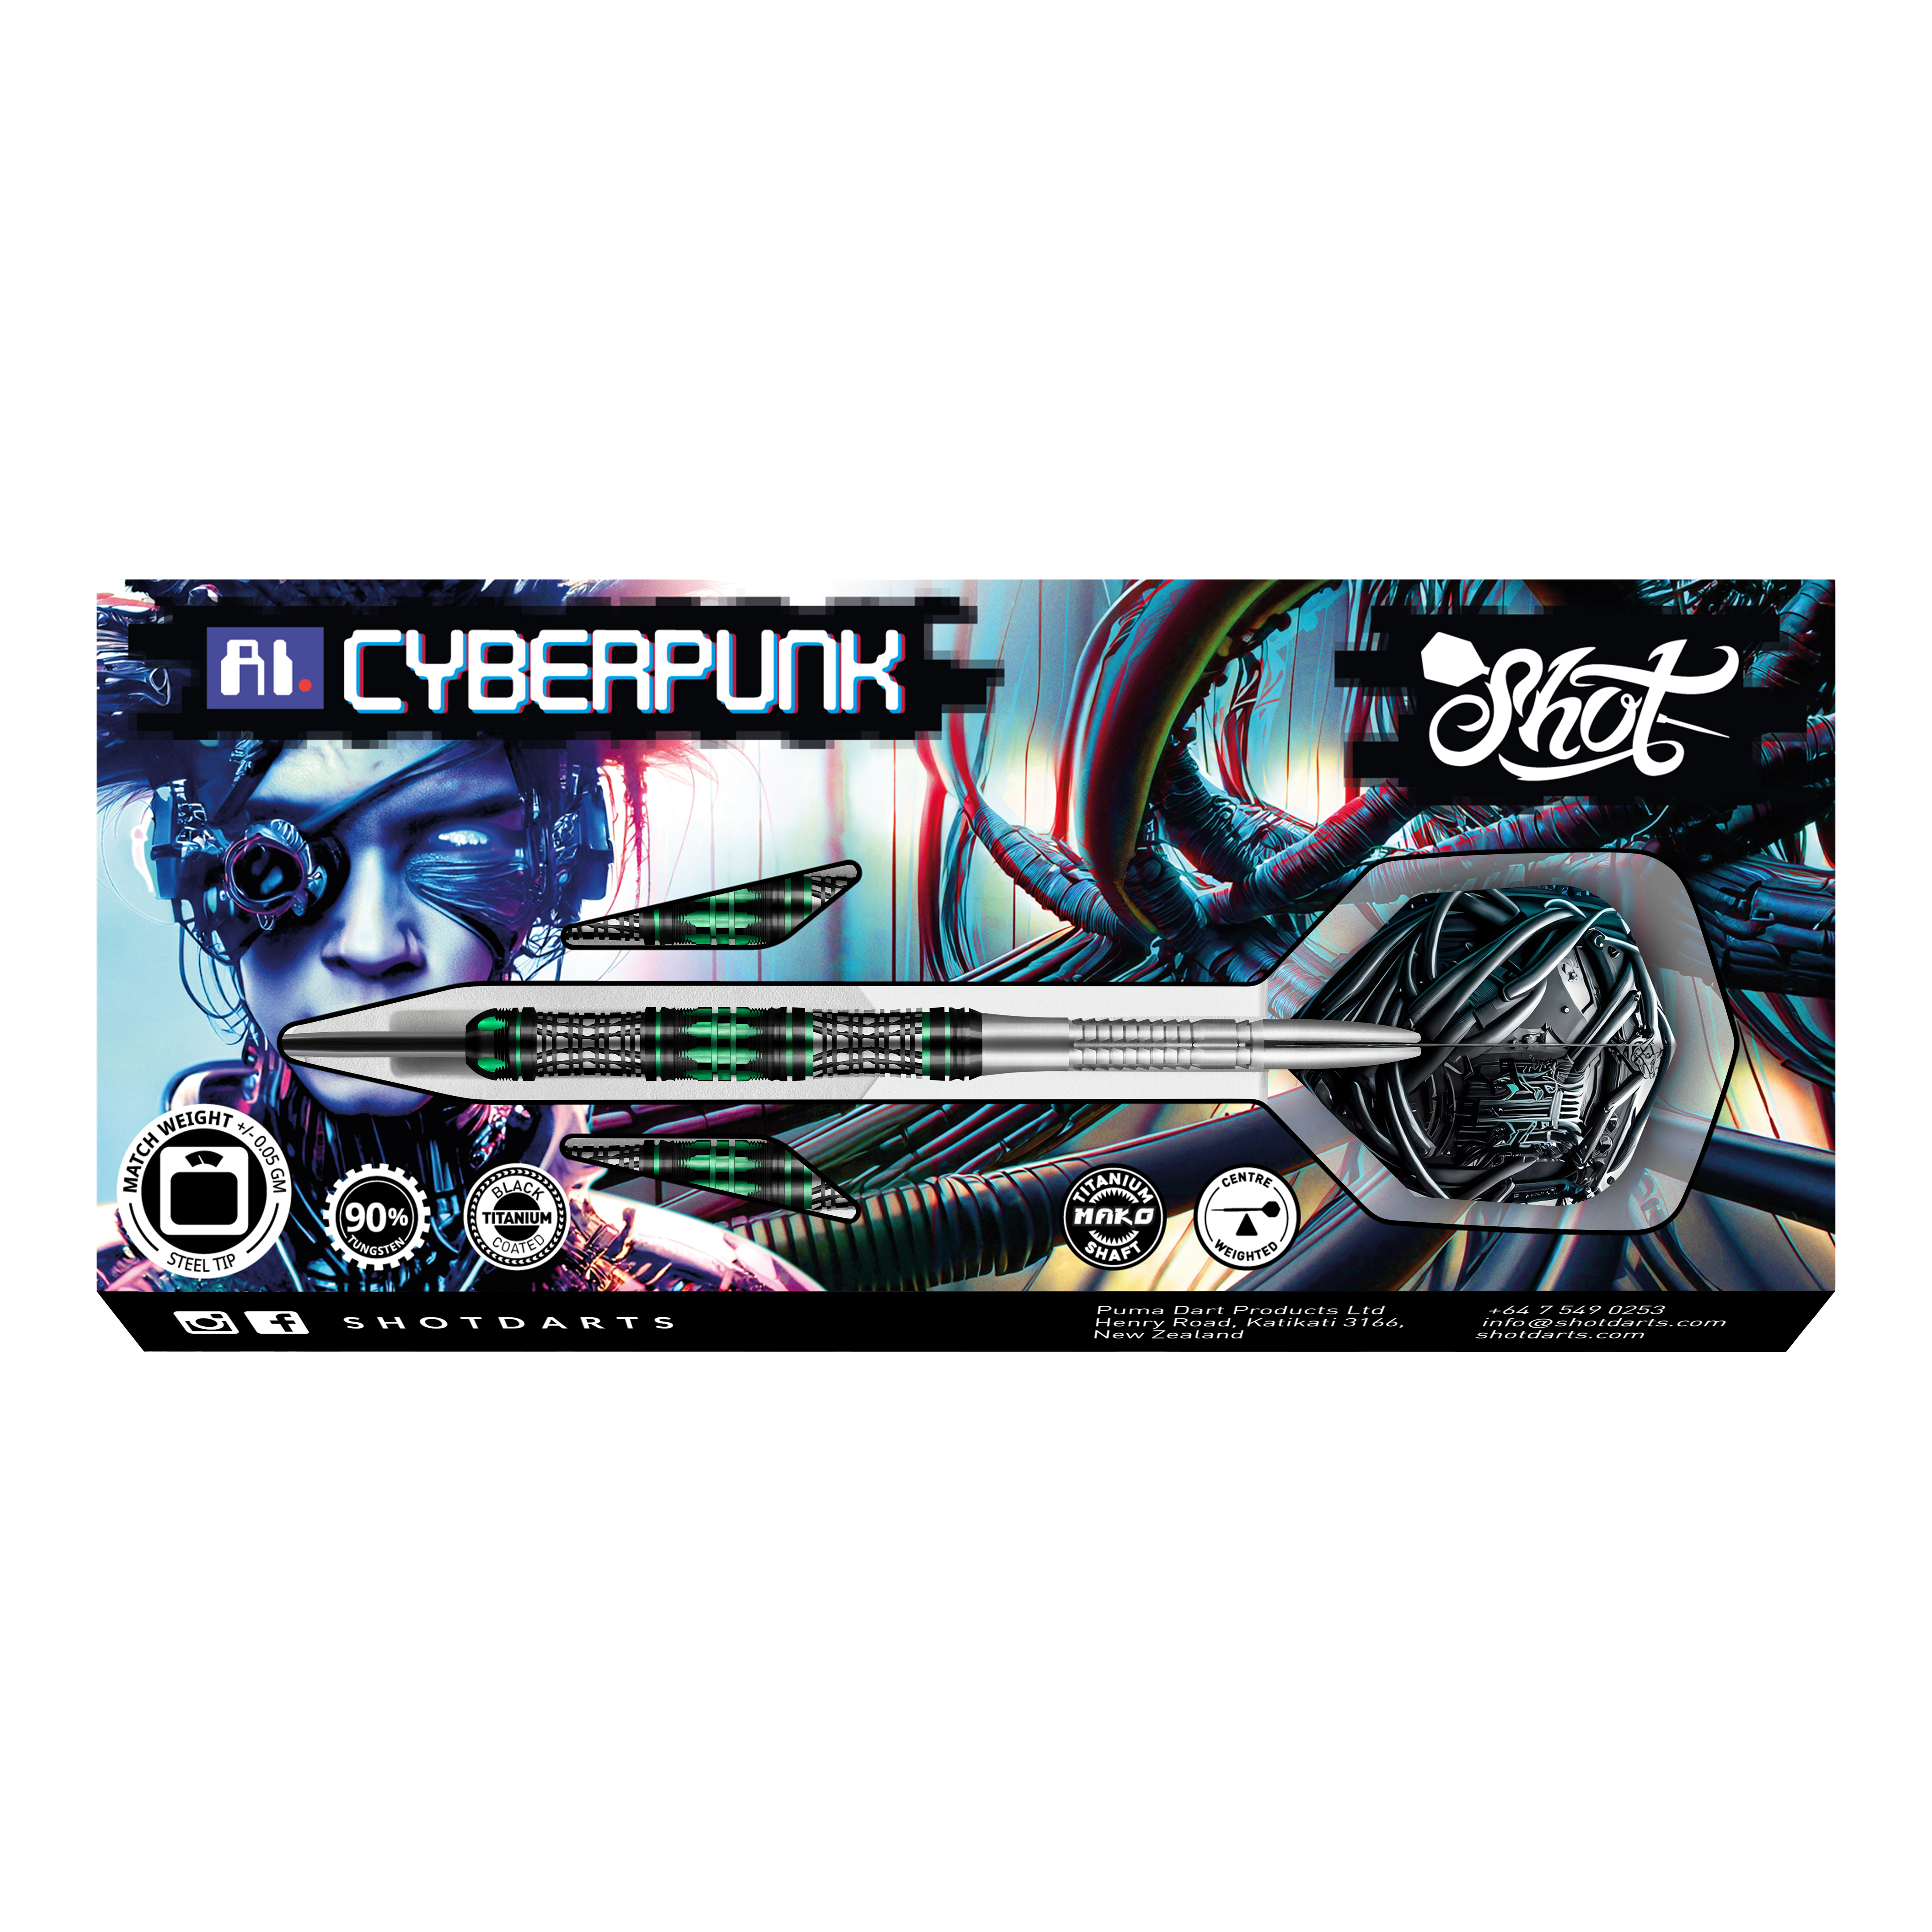 Shot AI Cyberpunk Steeldarts